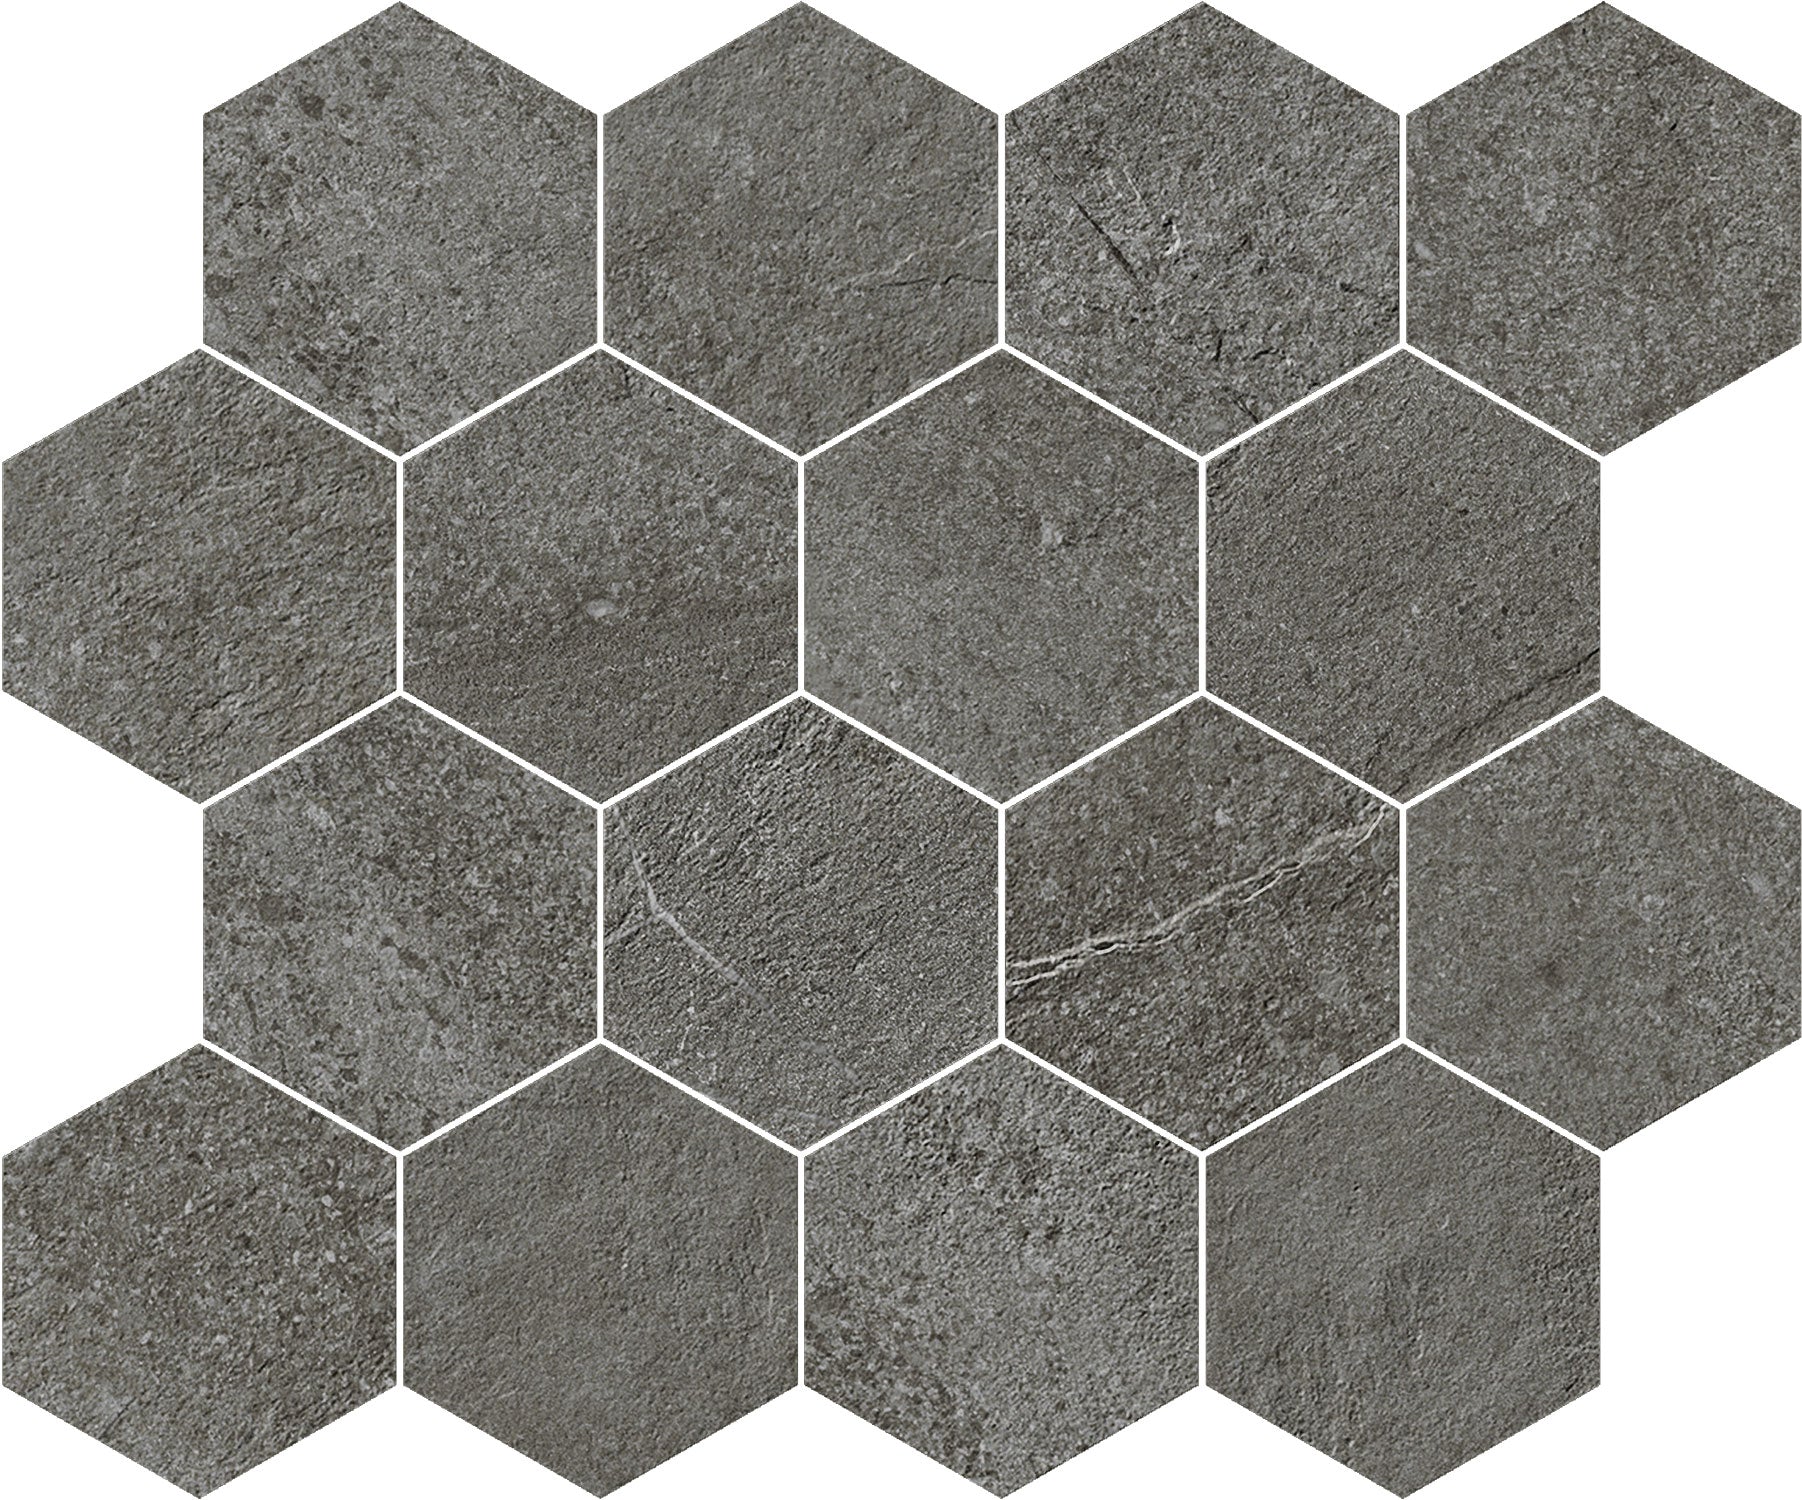 surface group international landmark journey stone contemorary dark matte mosaic d hexagon medium hexagon 12x10x9 mm for outdoor application manufactured by landmark